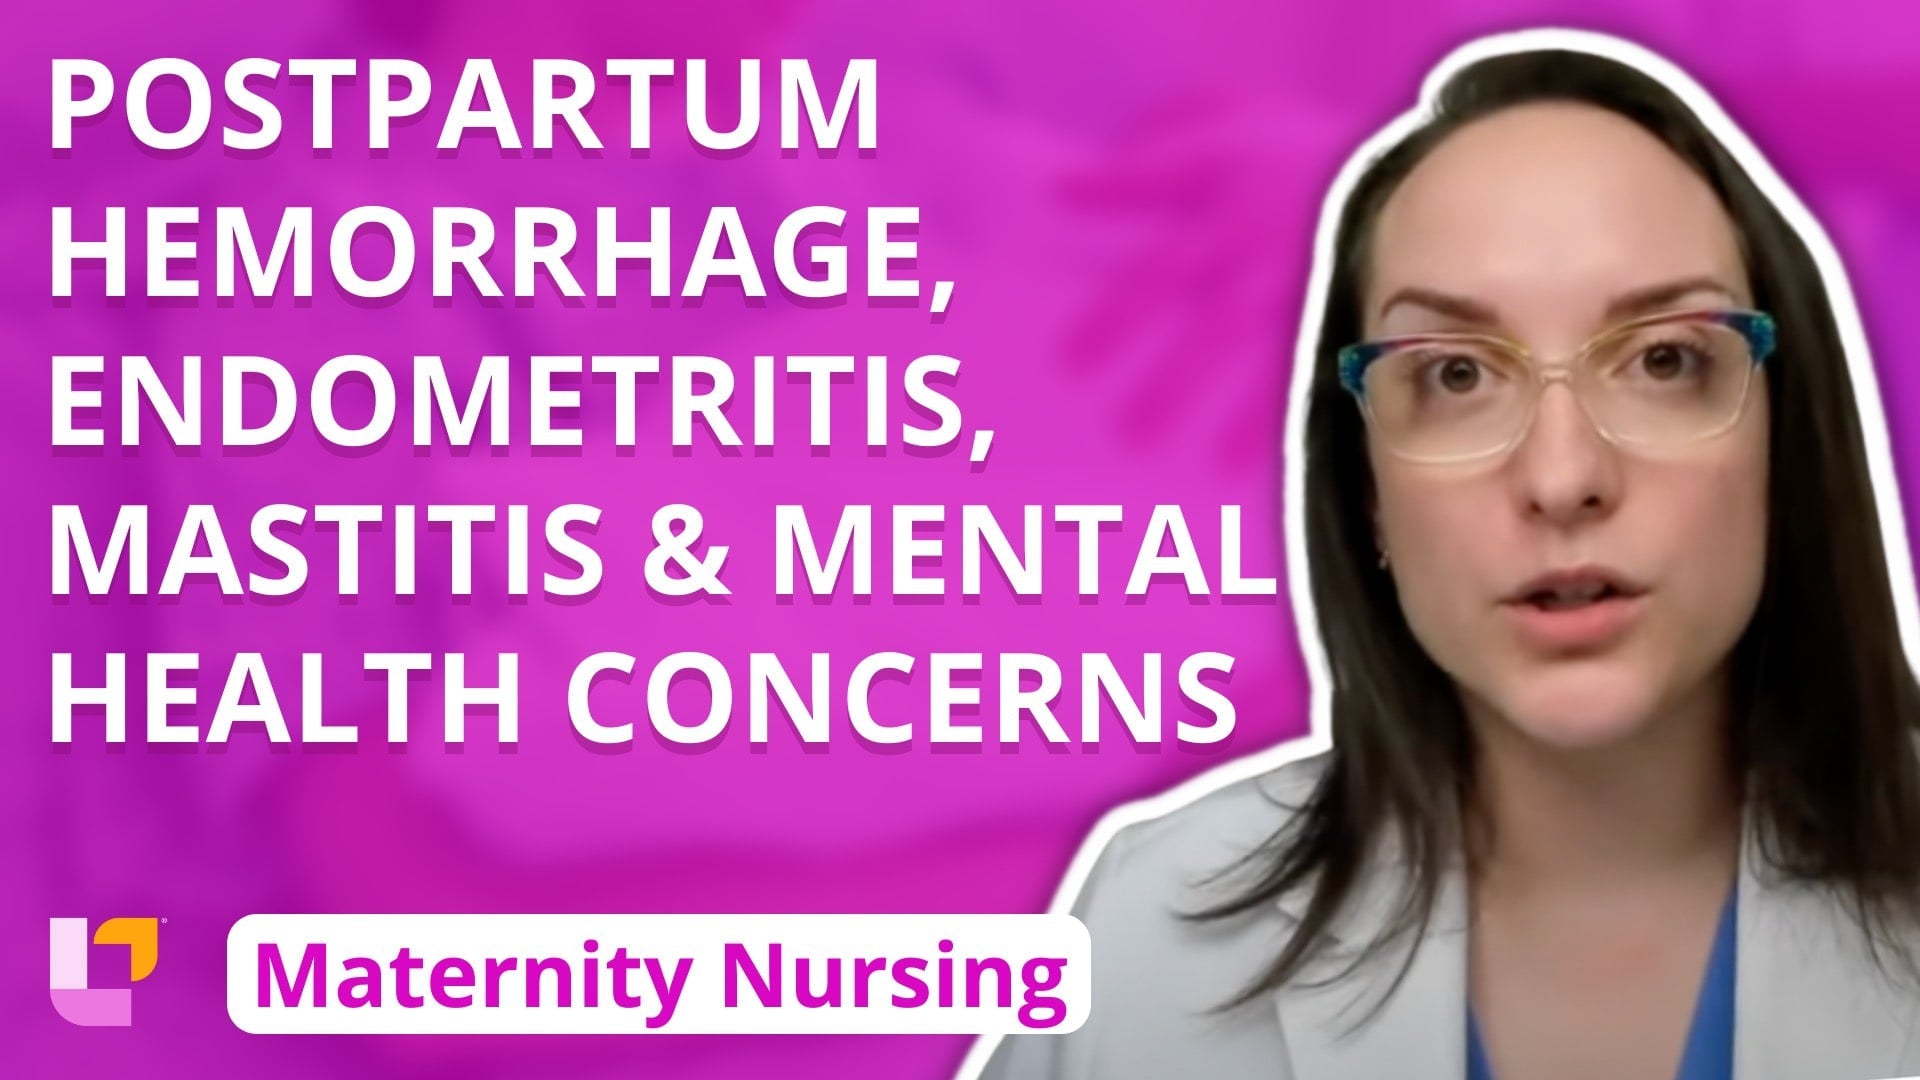 Maternity - Postpartum, part 5: Postpartum Hemorrhage, Endometritis, Mastitis, Mental Health Concerns - LevelUpRN